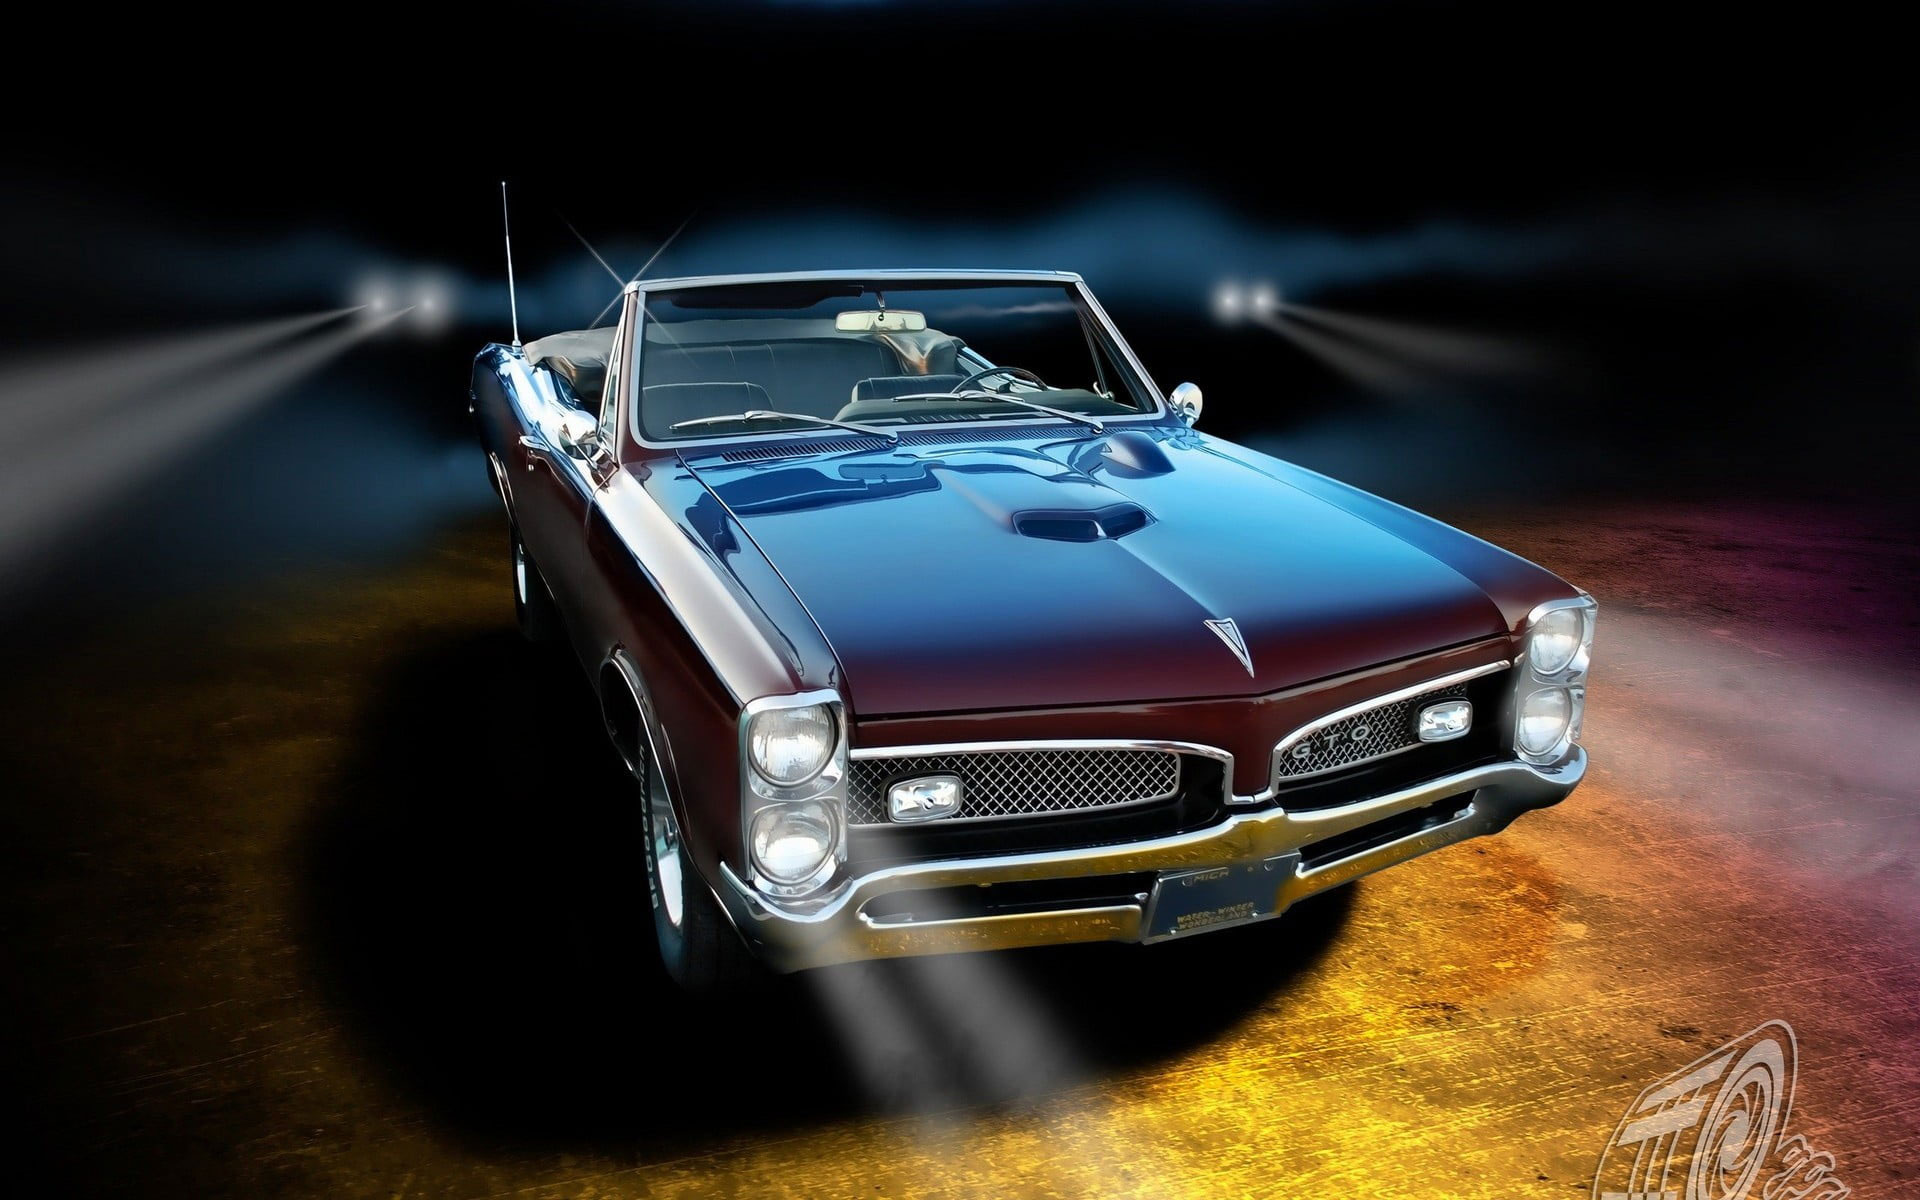 Maroon Pontiac GTO convertible in close-up photography wallpaper, car, vintage